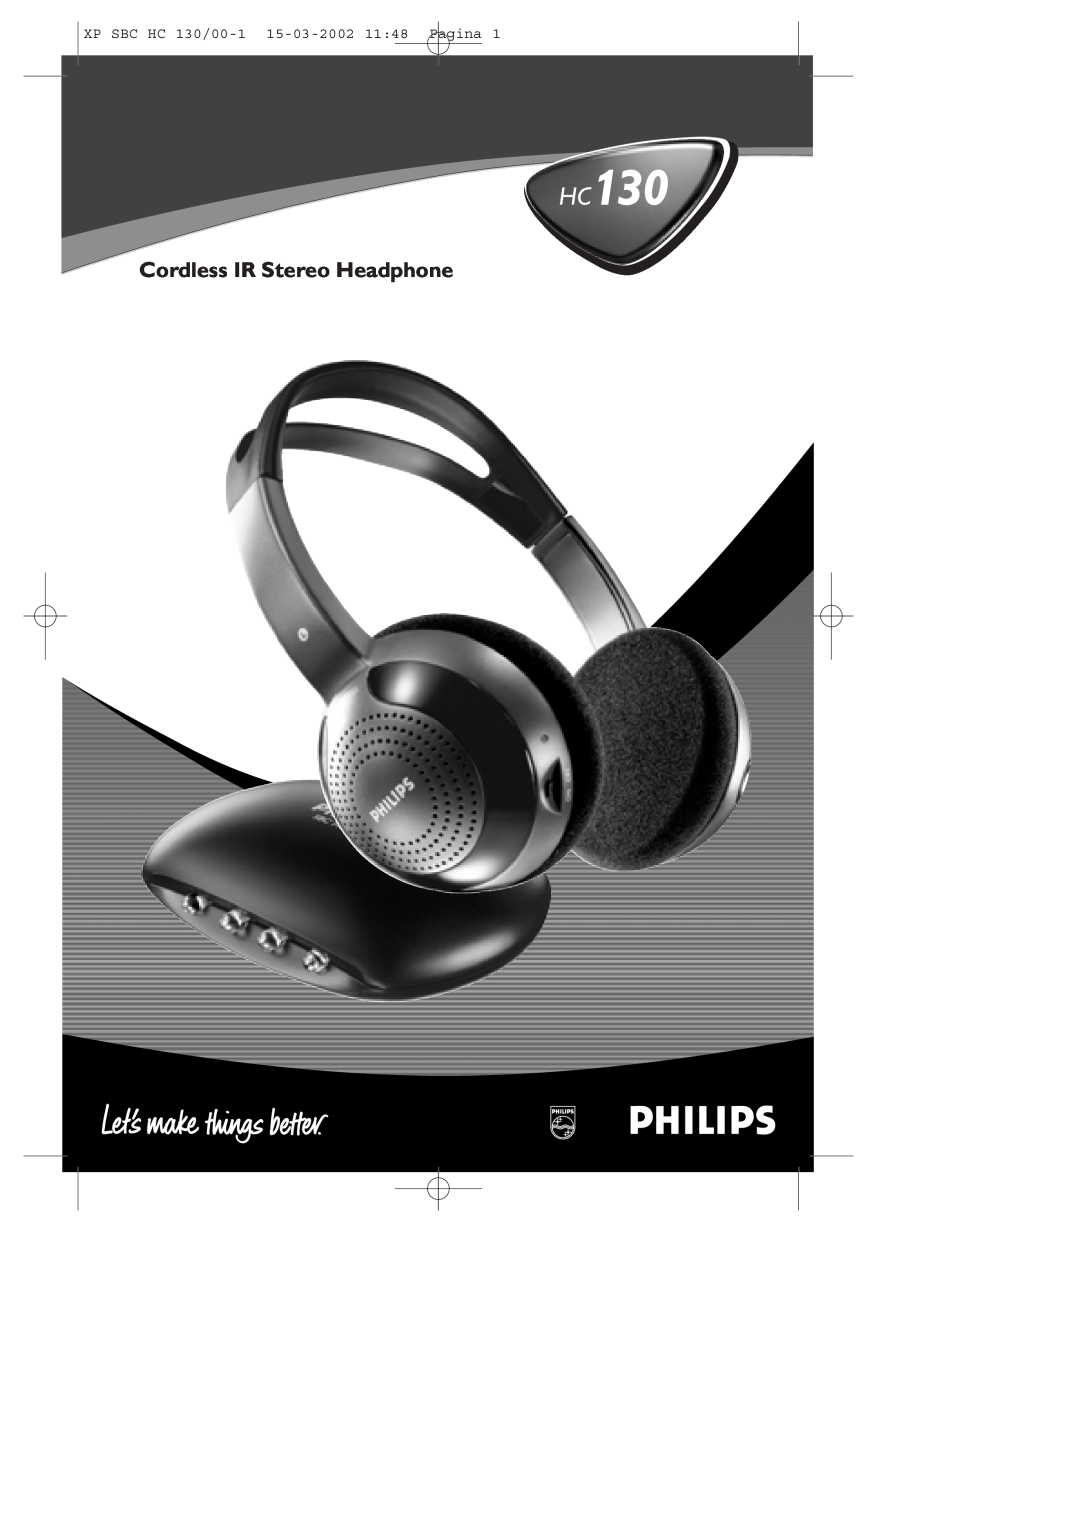 Philips SBC HC130 manual Cordless IR Stereo Headphone, XP SBC HC 130/00-1 15-03-200211 48 Pagina 